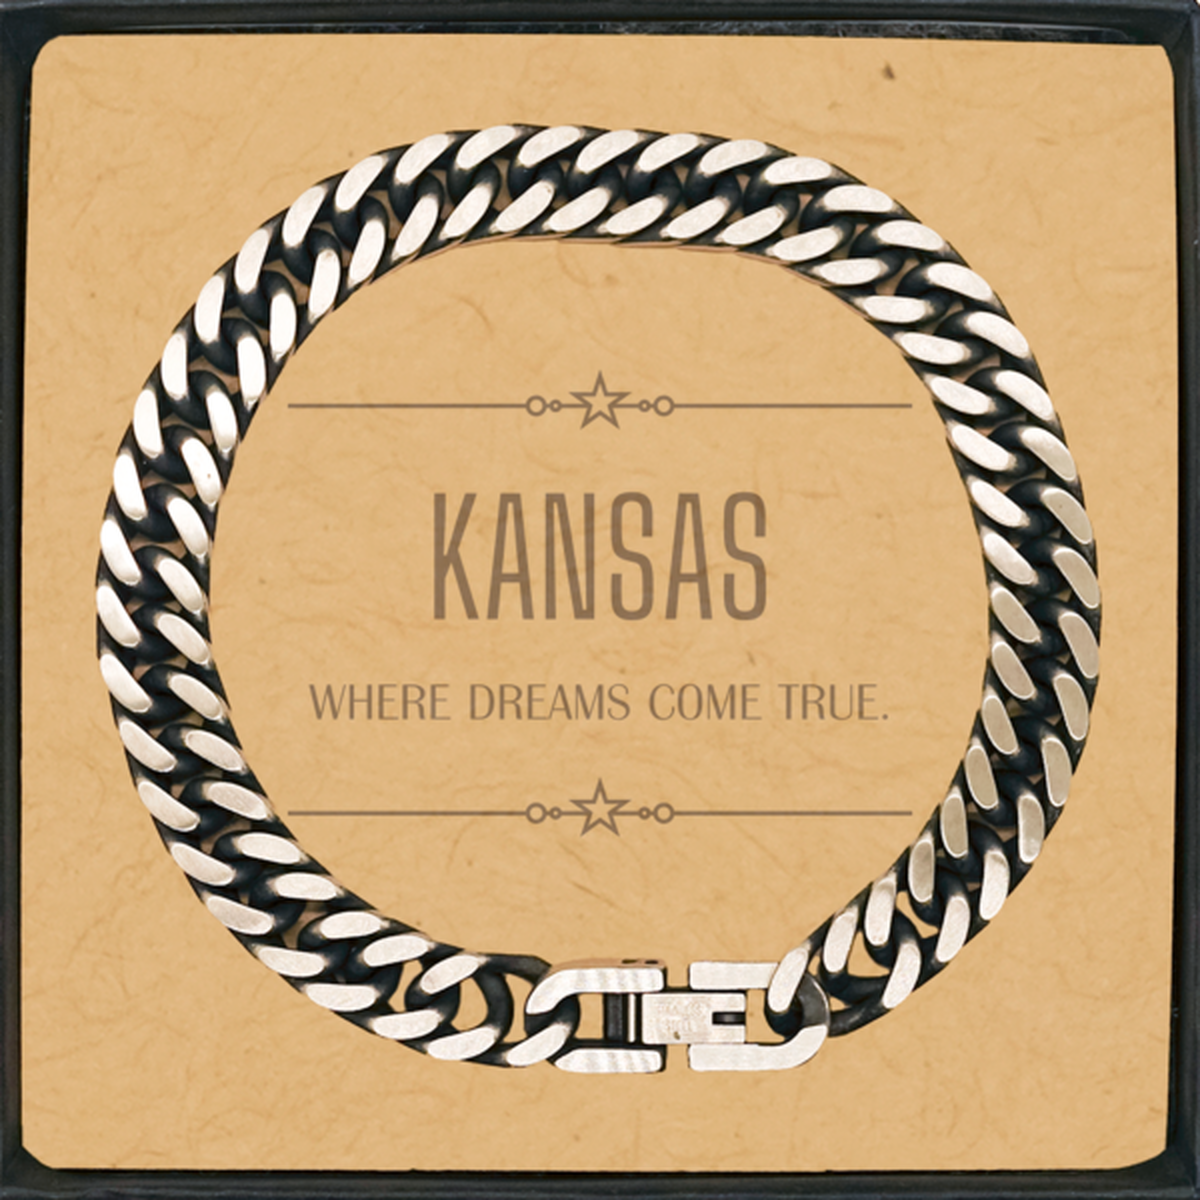 Love Kansas State Cuban Link Chain Bracelet, Kansas Where dreams come true, Birthday Inspirational Gifts For Kansas Men, Women, Friends